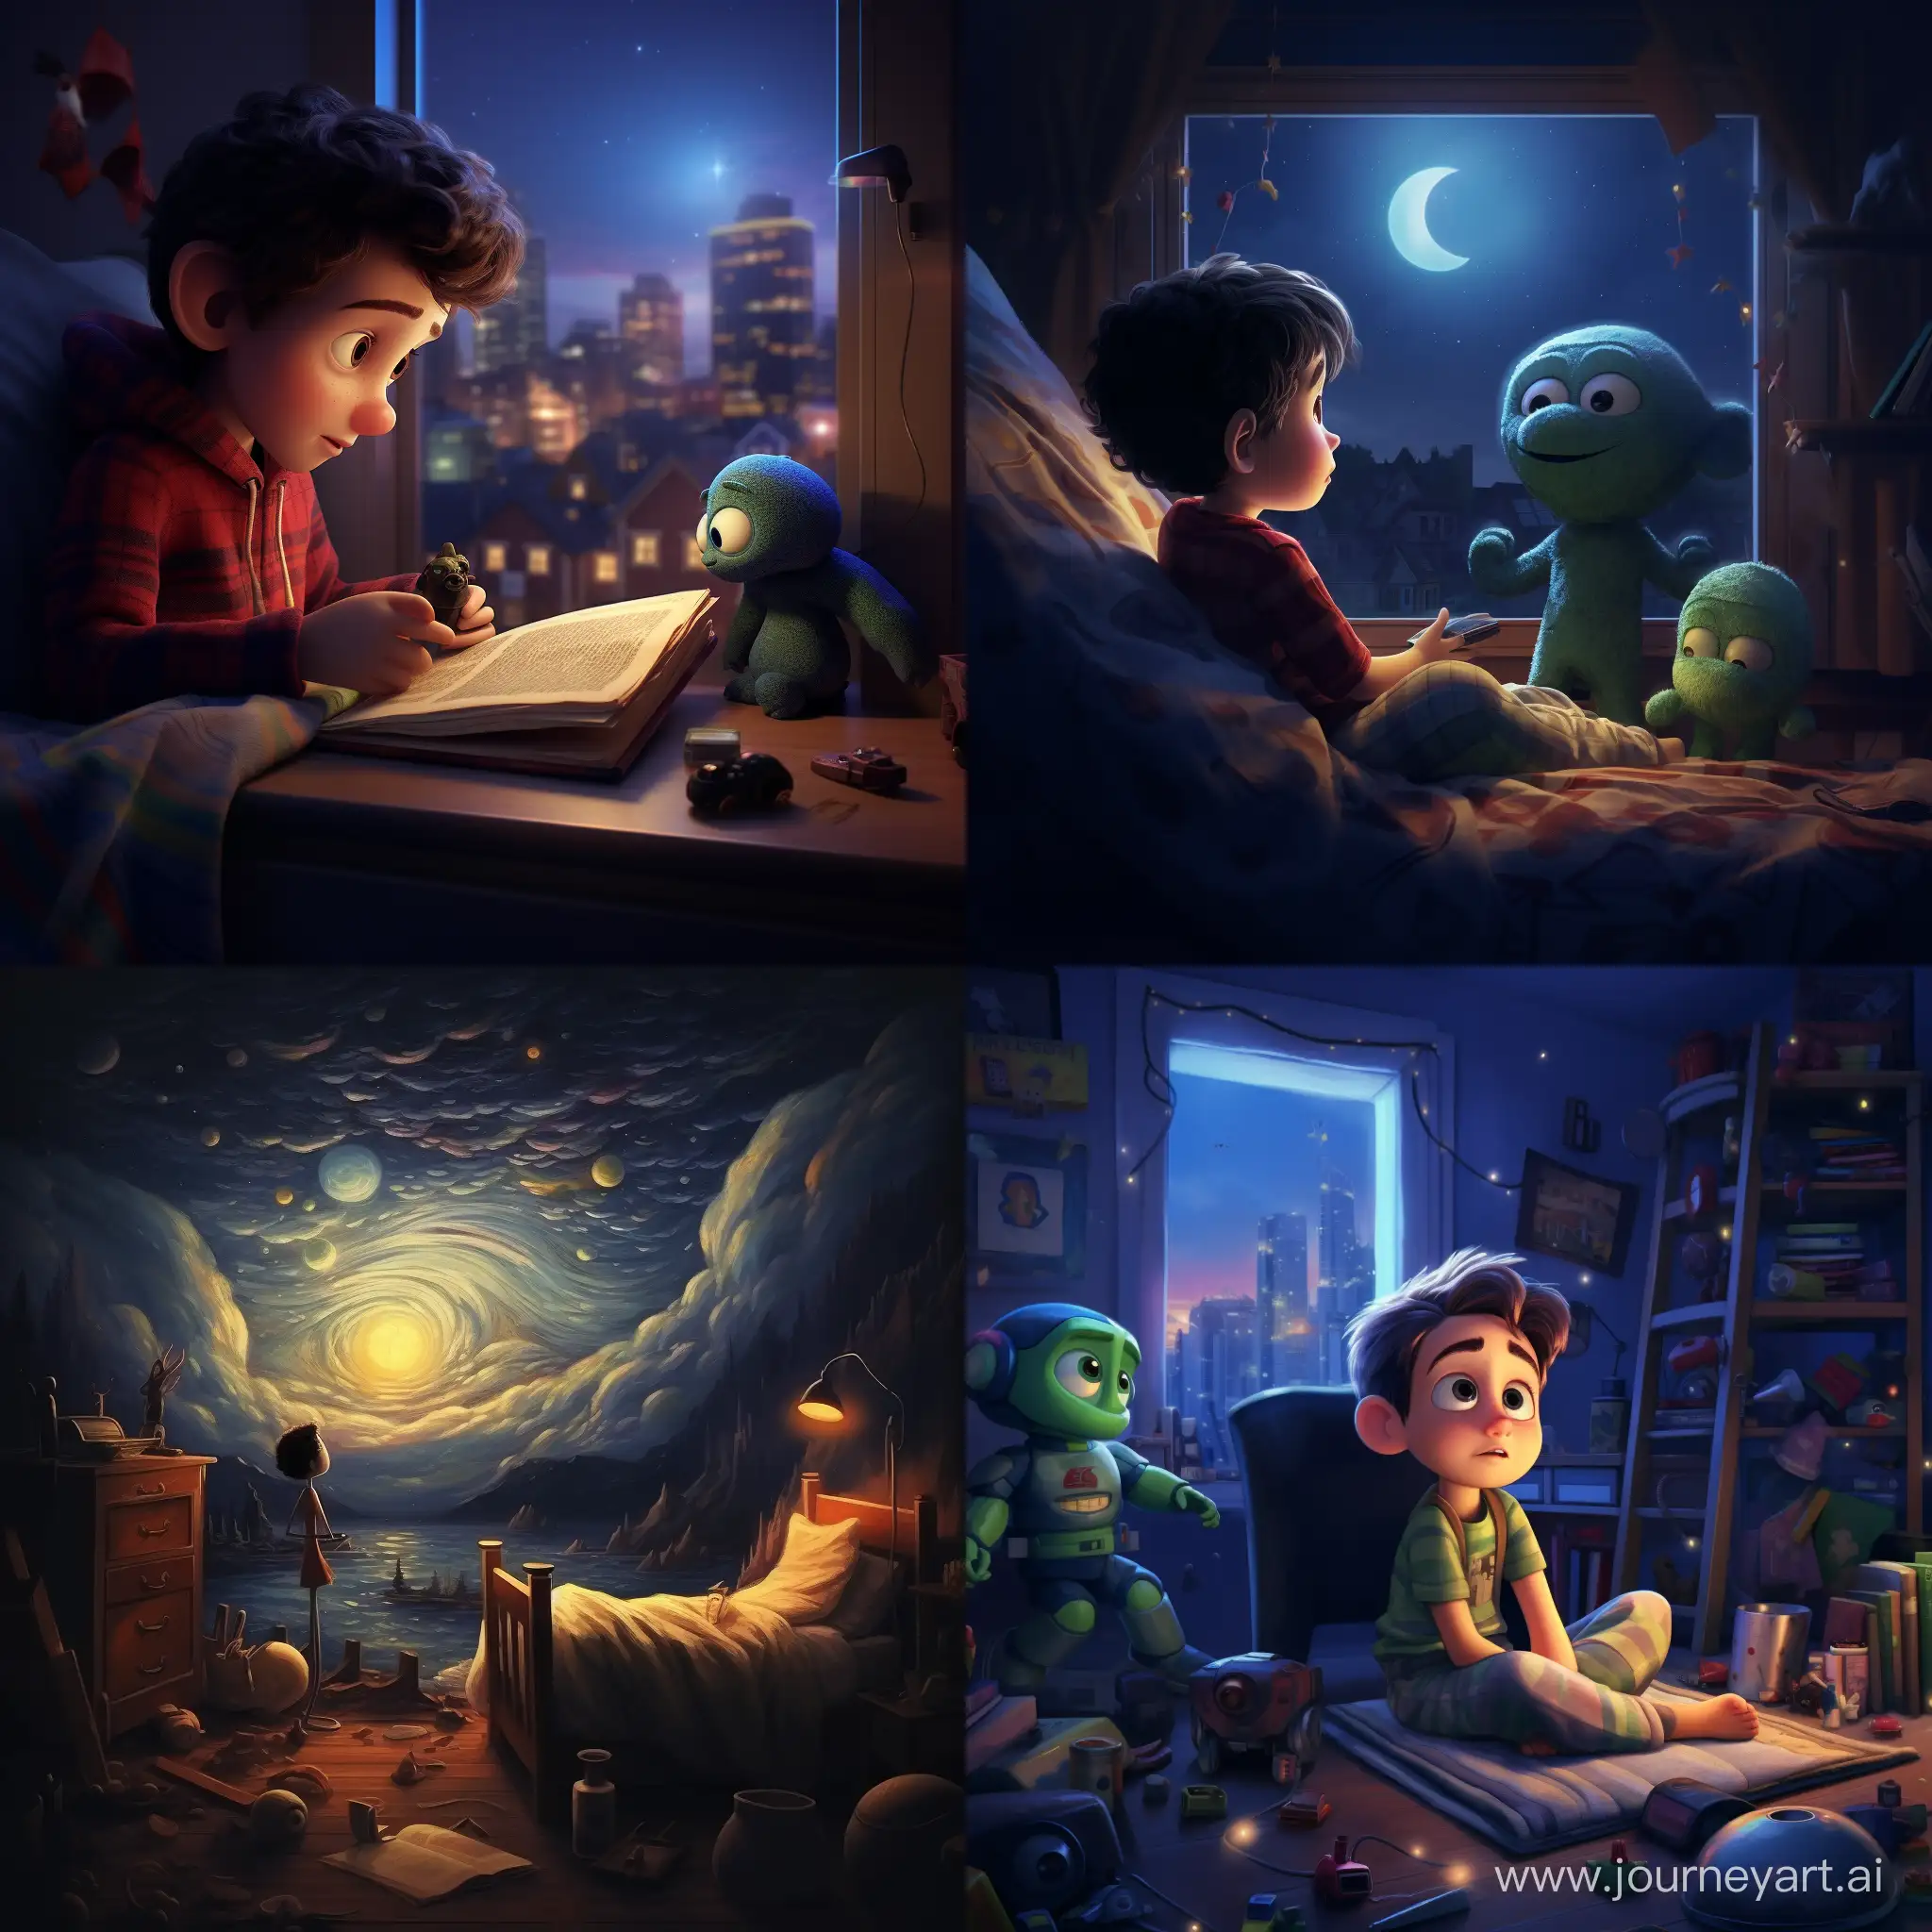 Enchanting-Night-Scene-in-Pixar-Style